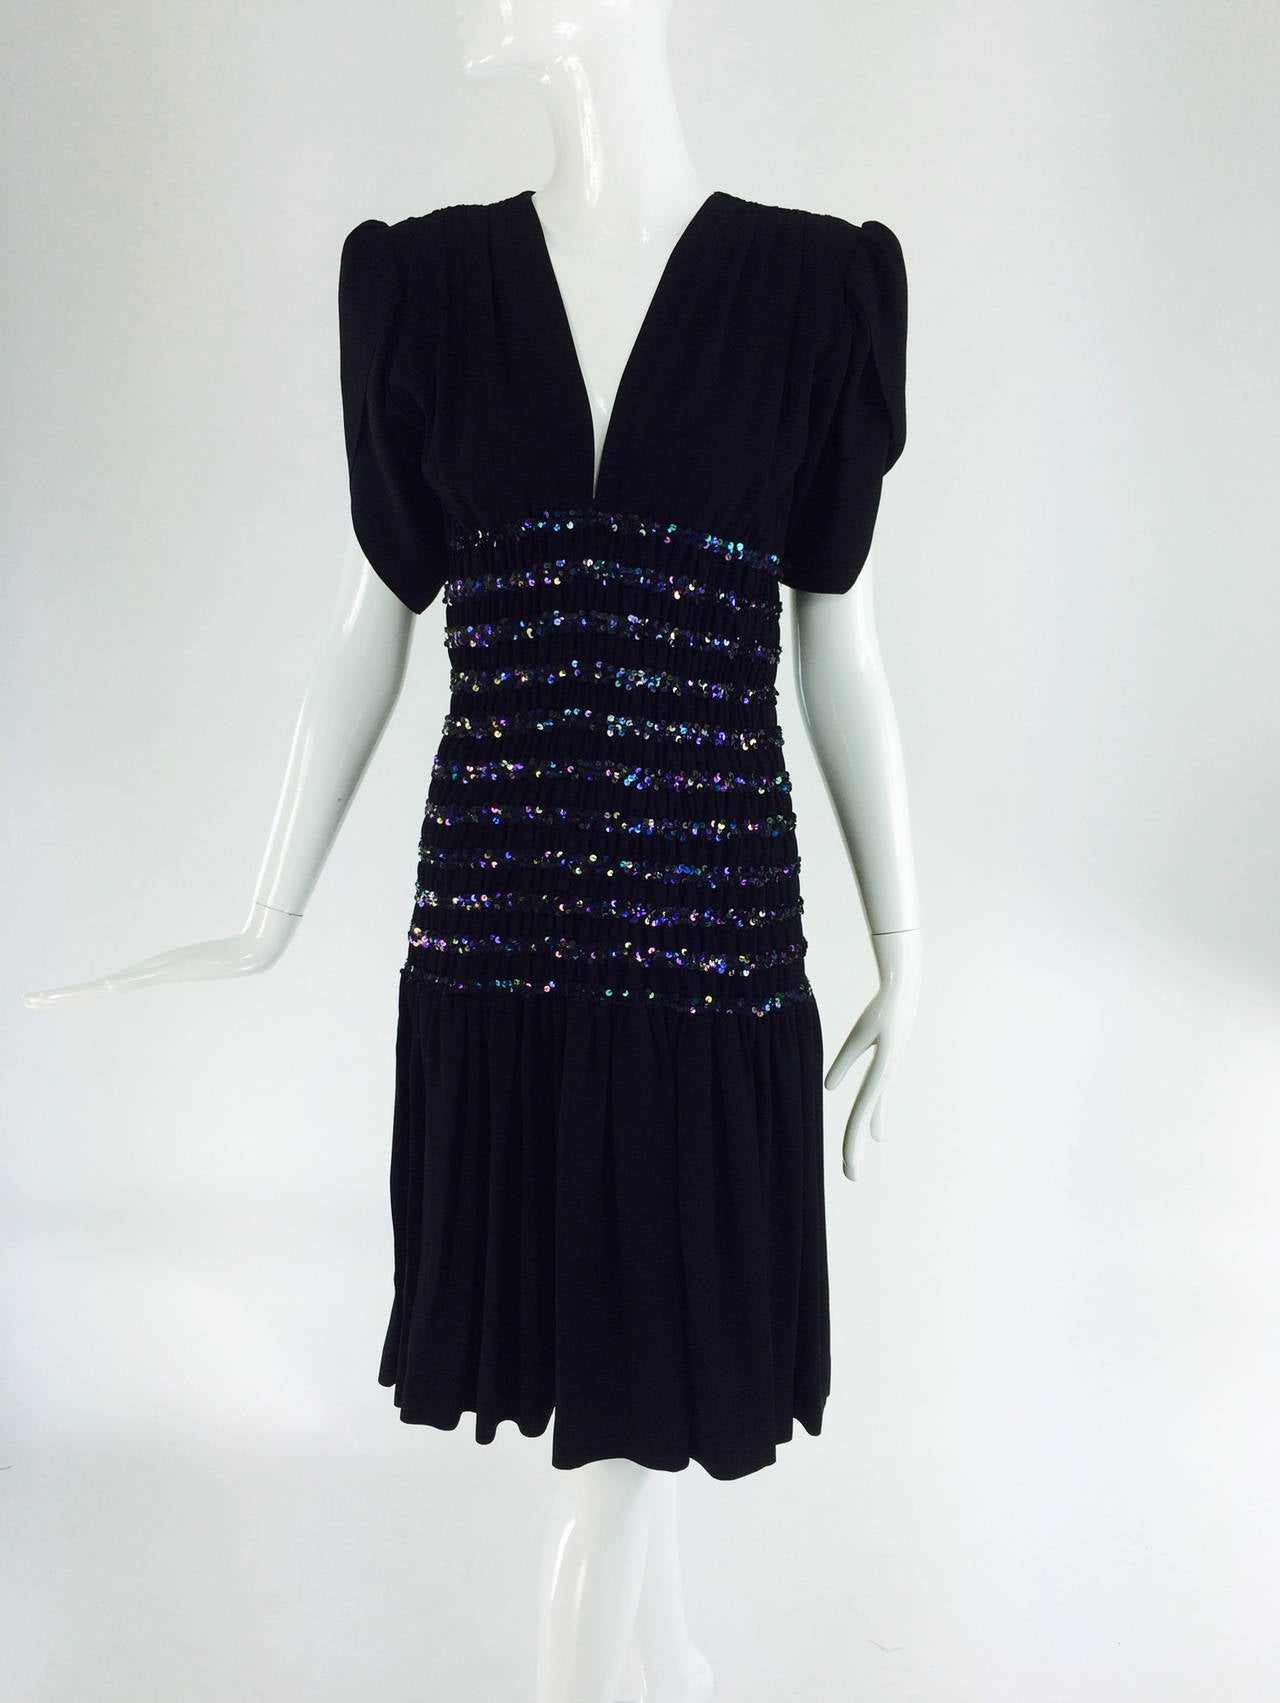 1971 Yves St Laurent Liberation collection black crepe sequin dress 3